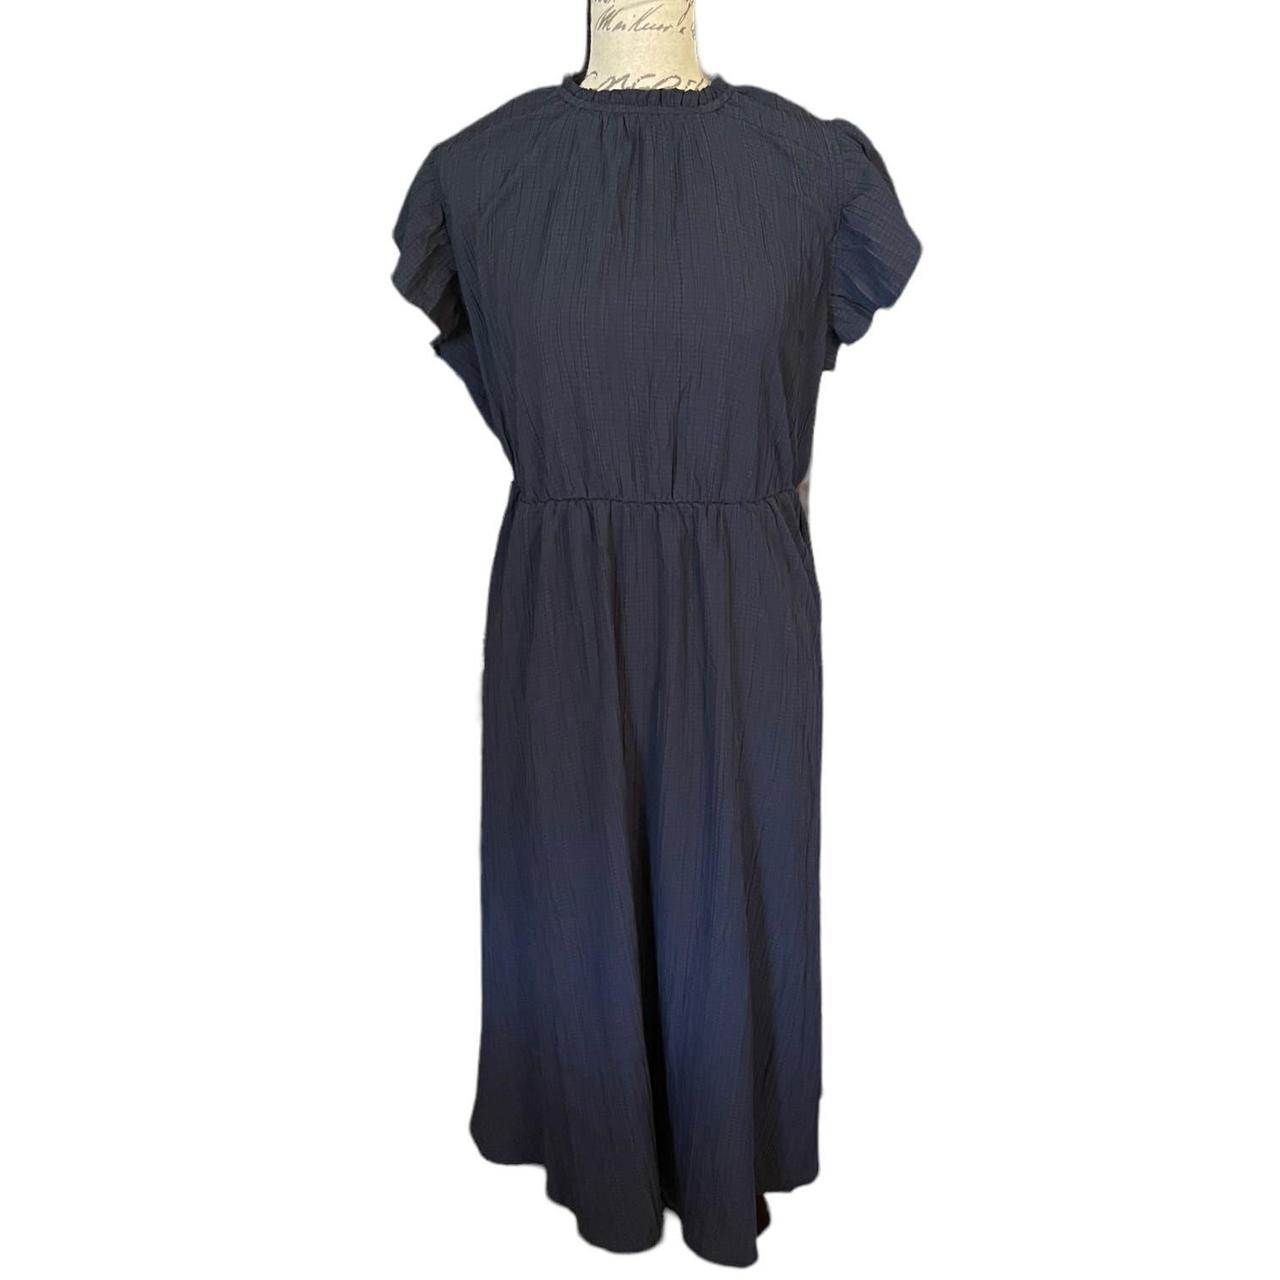 Bloomchic Plus Size Navy Blue Dress Size 14/16 * ... - Depop